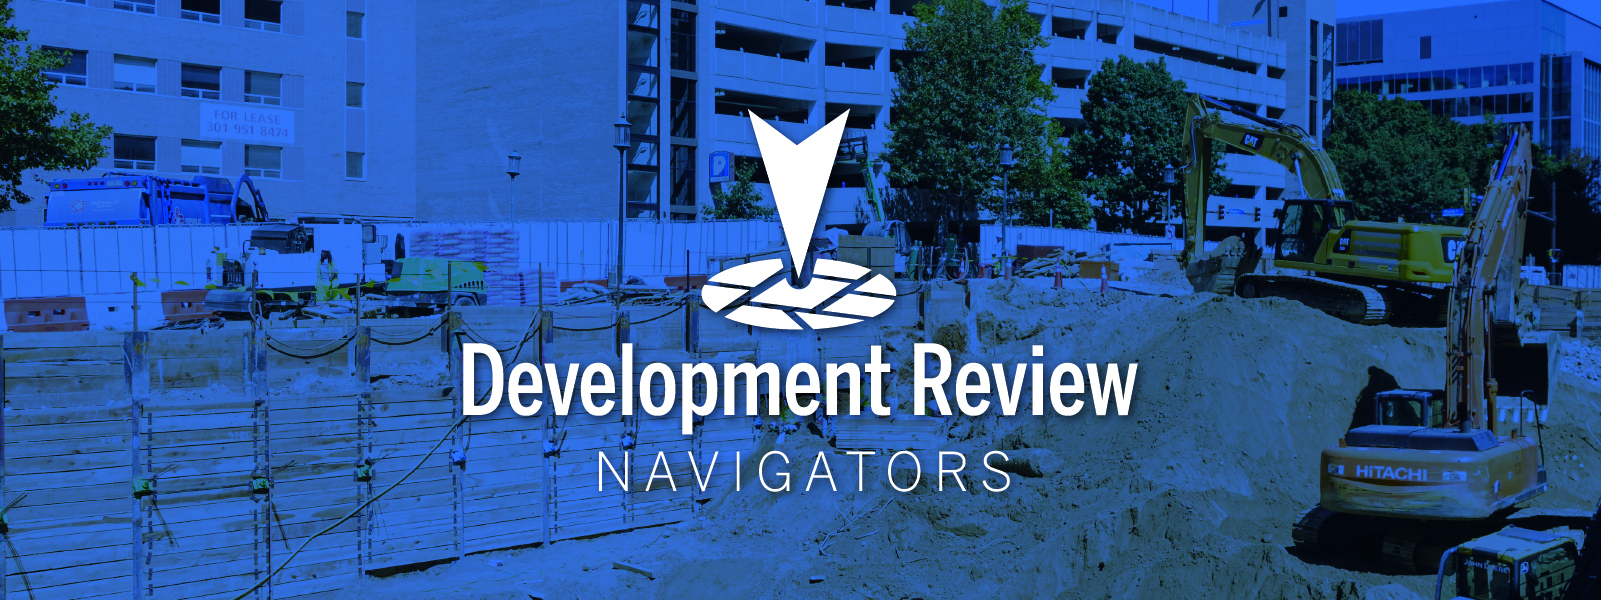 Development Review Navigators banner